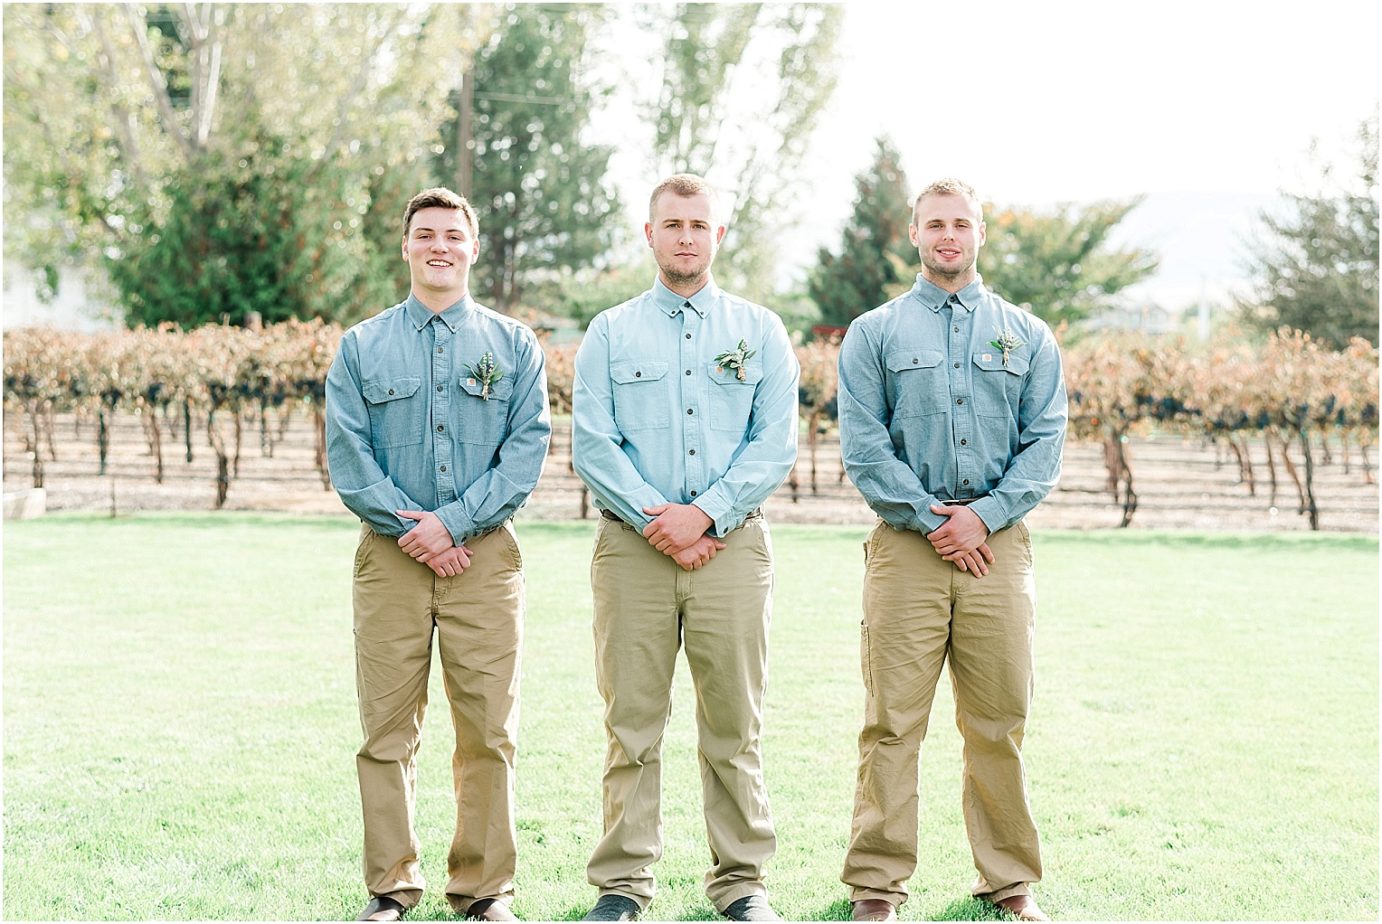 Sugar pine barn wedding tucannon cellars Brandon and Chloe groomsmen in dusty blue shirts